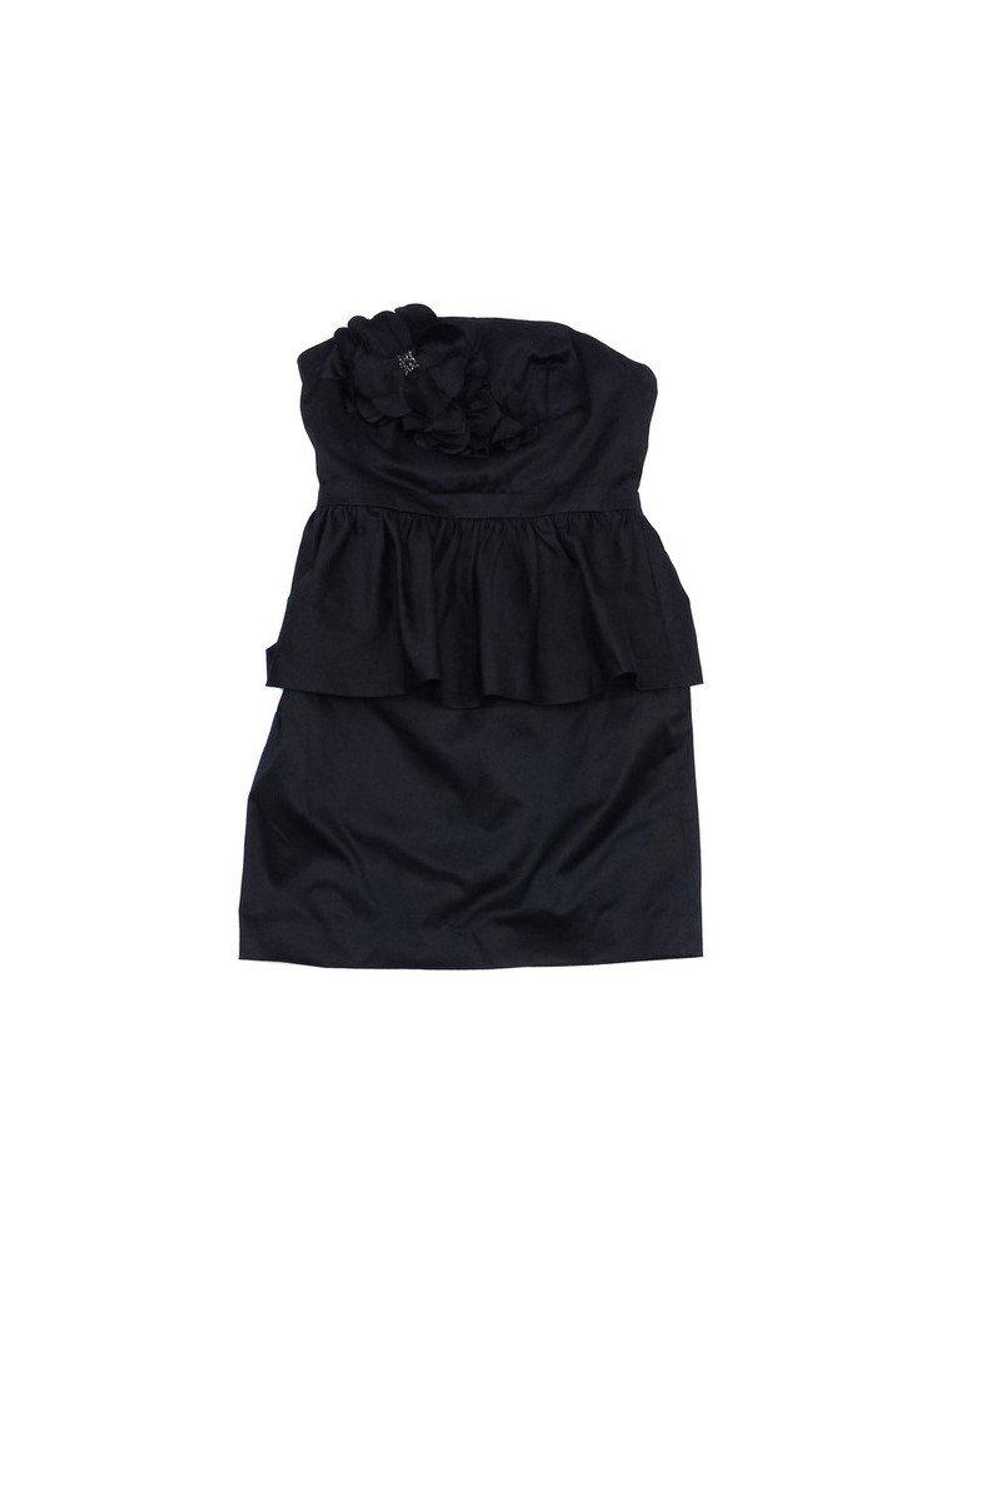 Lilly Pulitzer - Black Peplum Strapless Dress Sz 8 - image 1